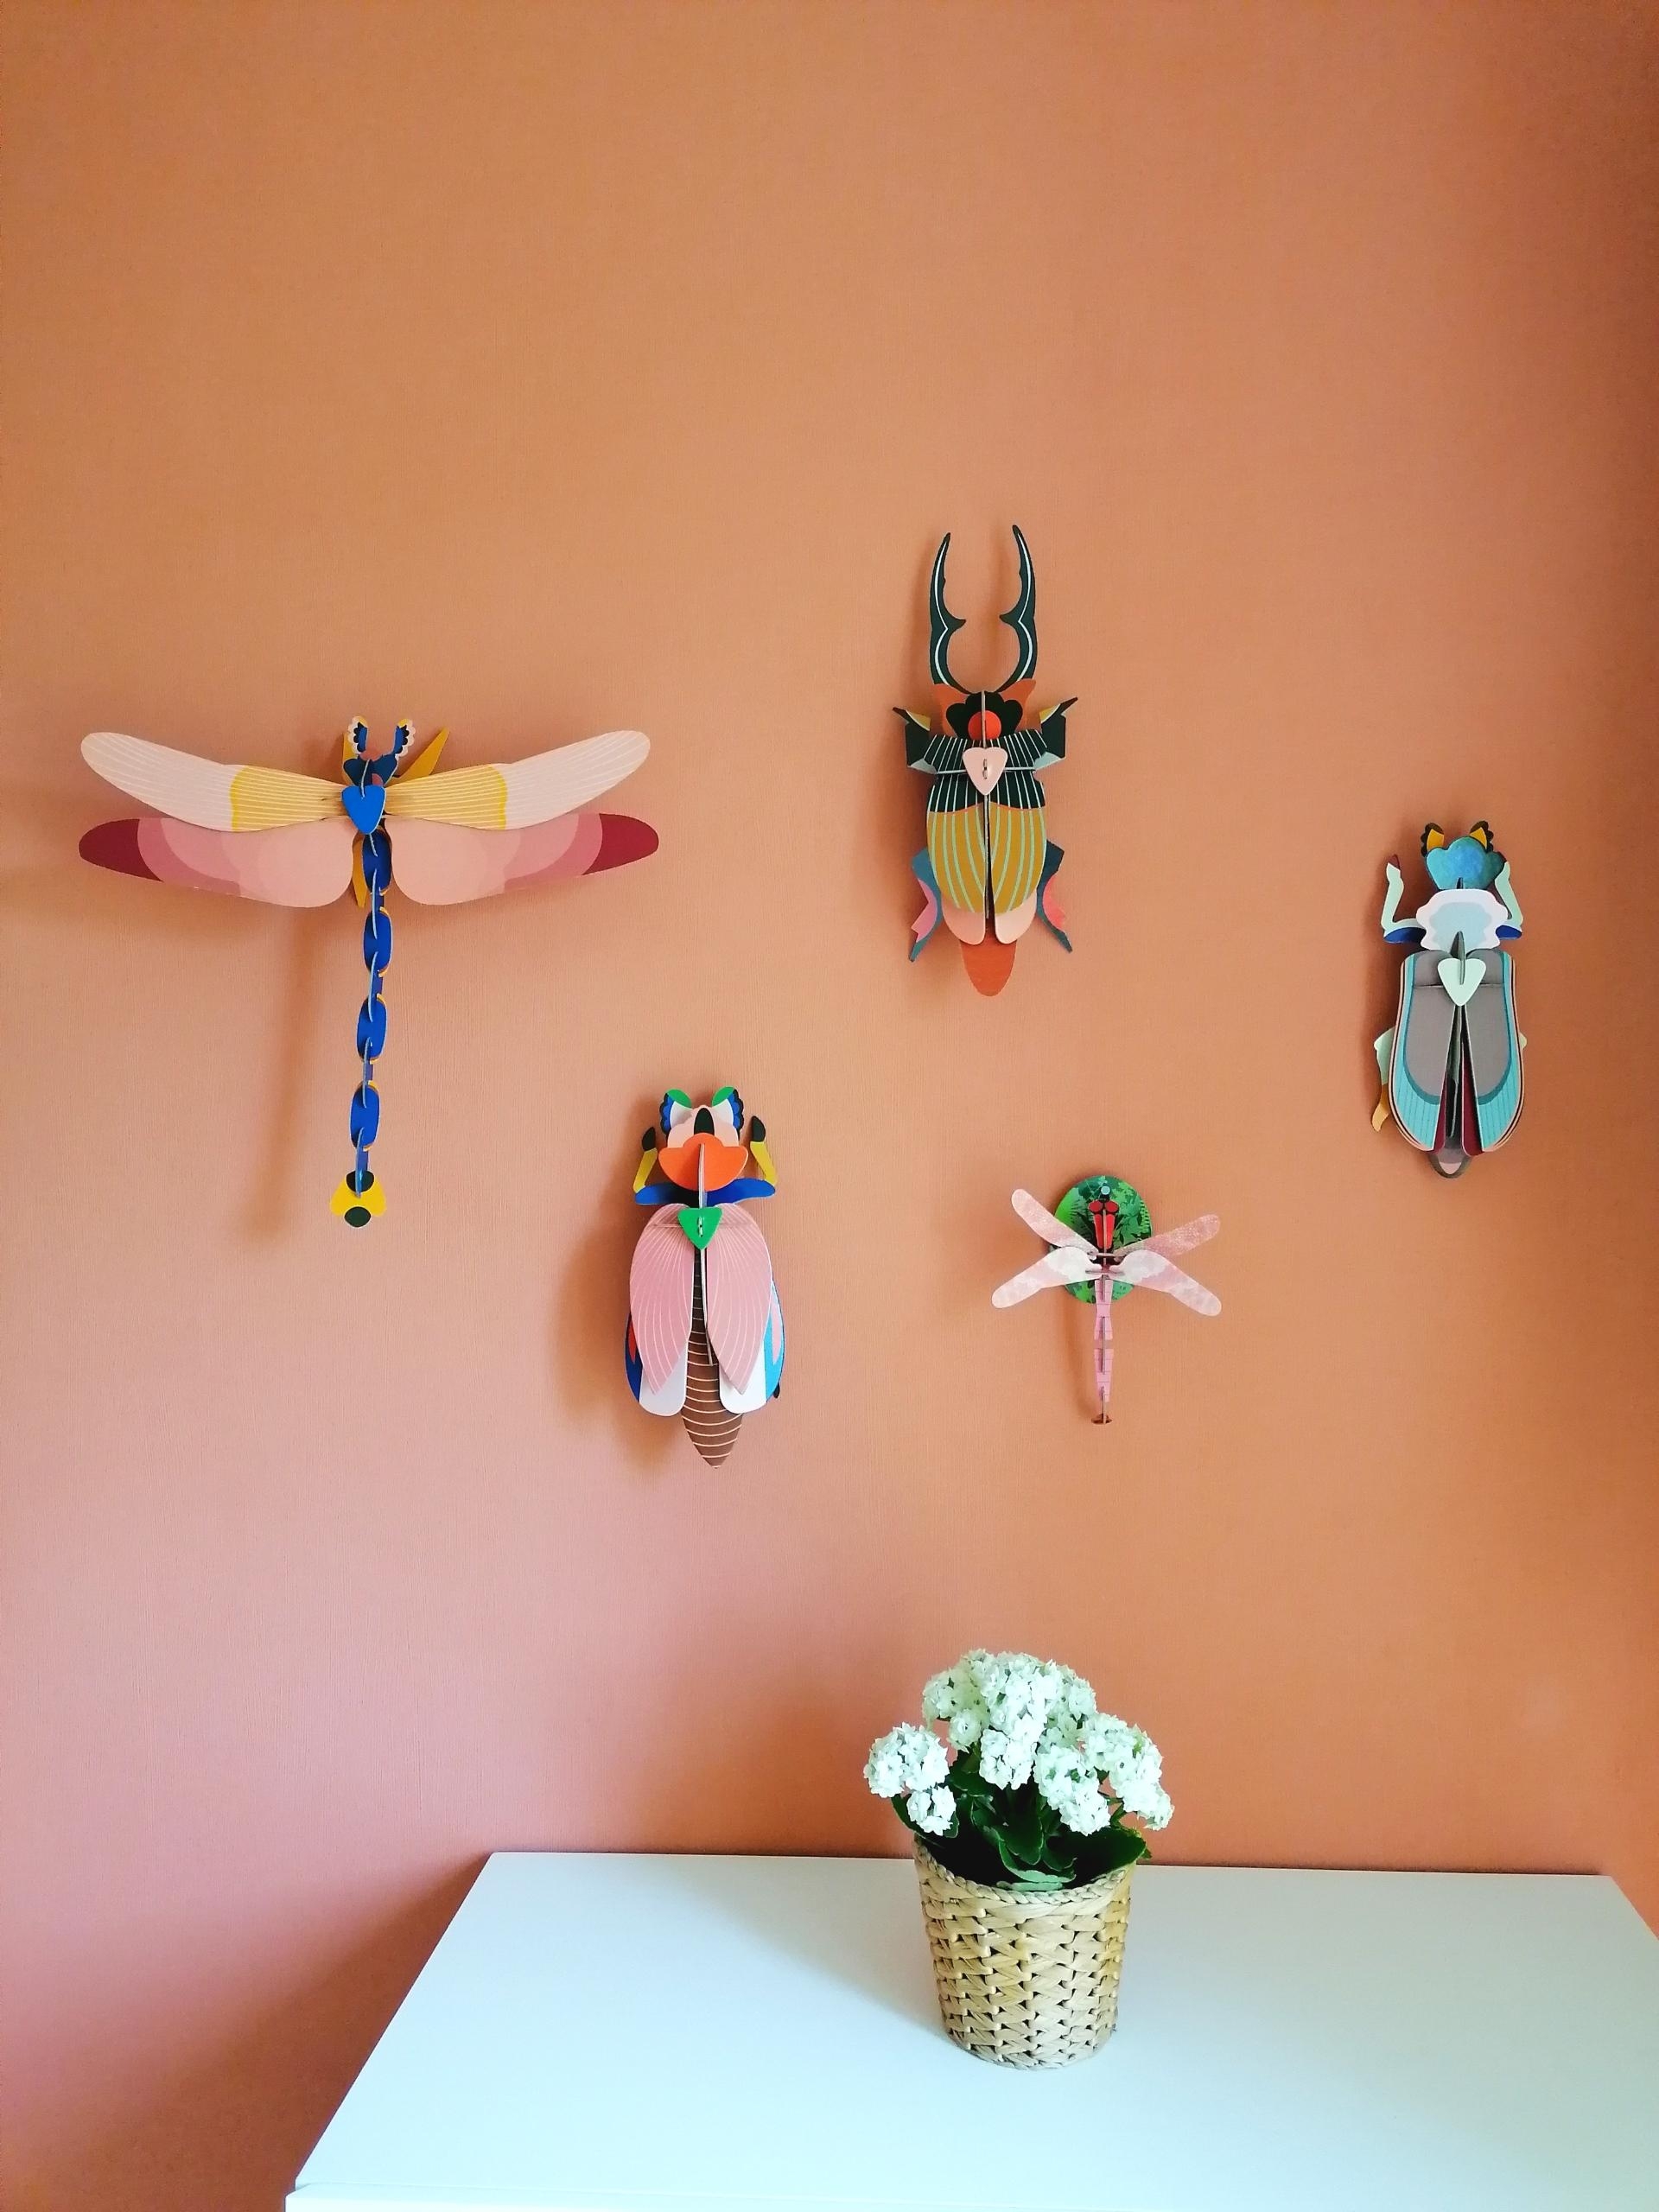 Artenvielfalt im Kinderzimmer
#kidsroom#kinderzimmer#bunt#cokours#colourful#wanddekoration#walldecor